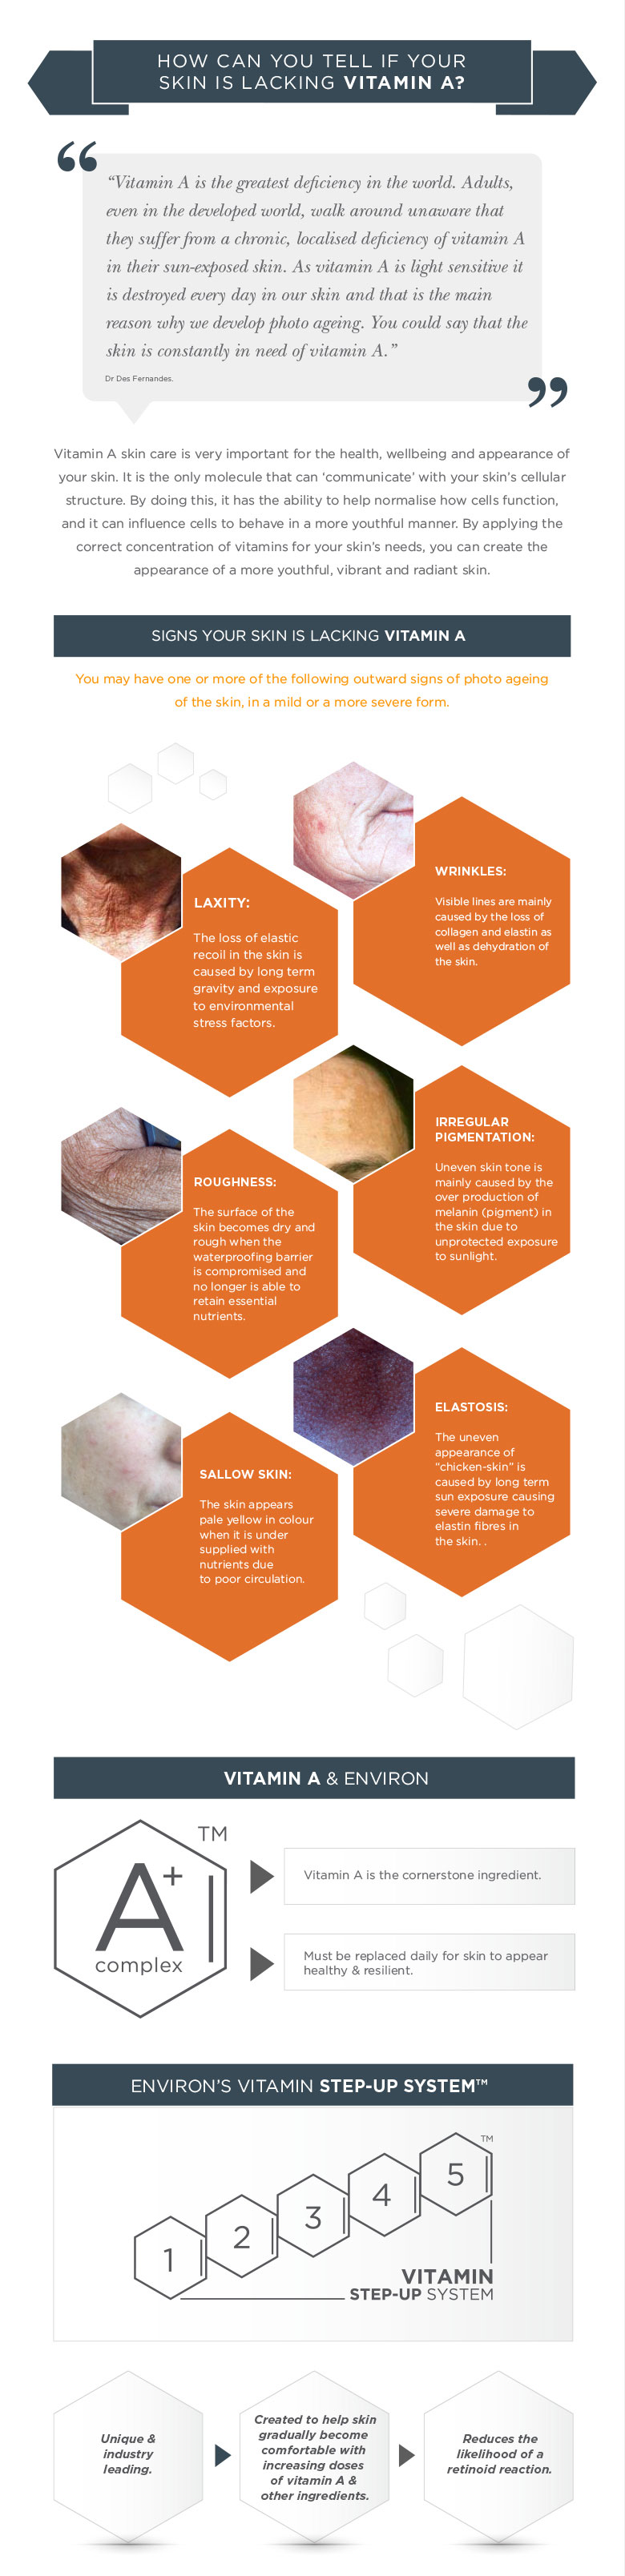 Environ Skin Care - Vitamin A Skin Care Infographic